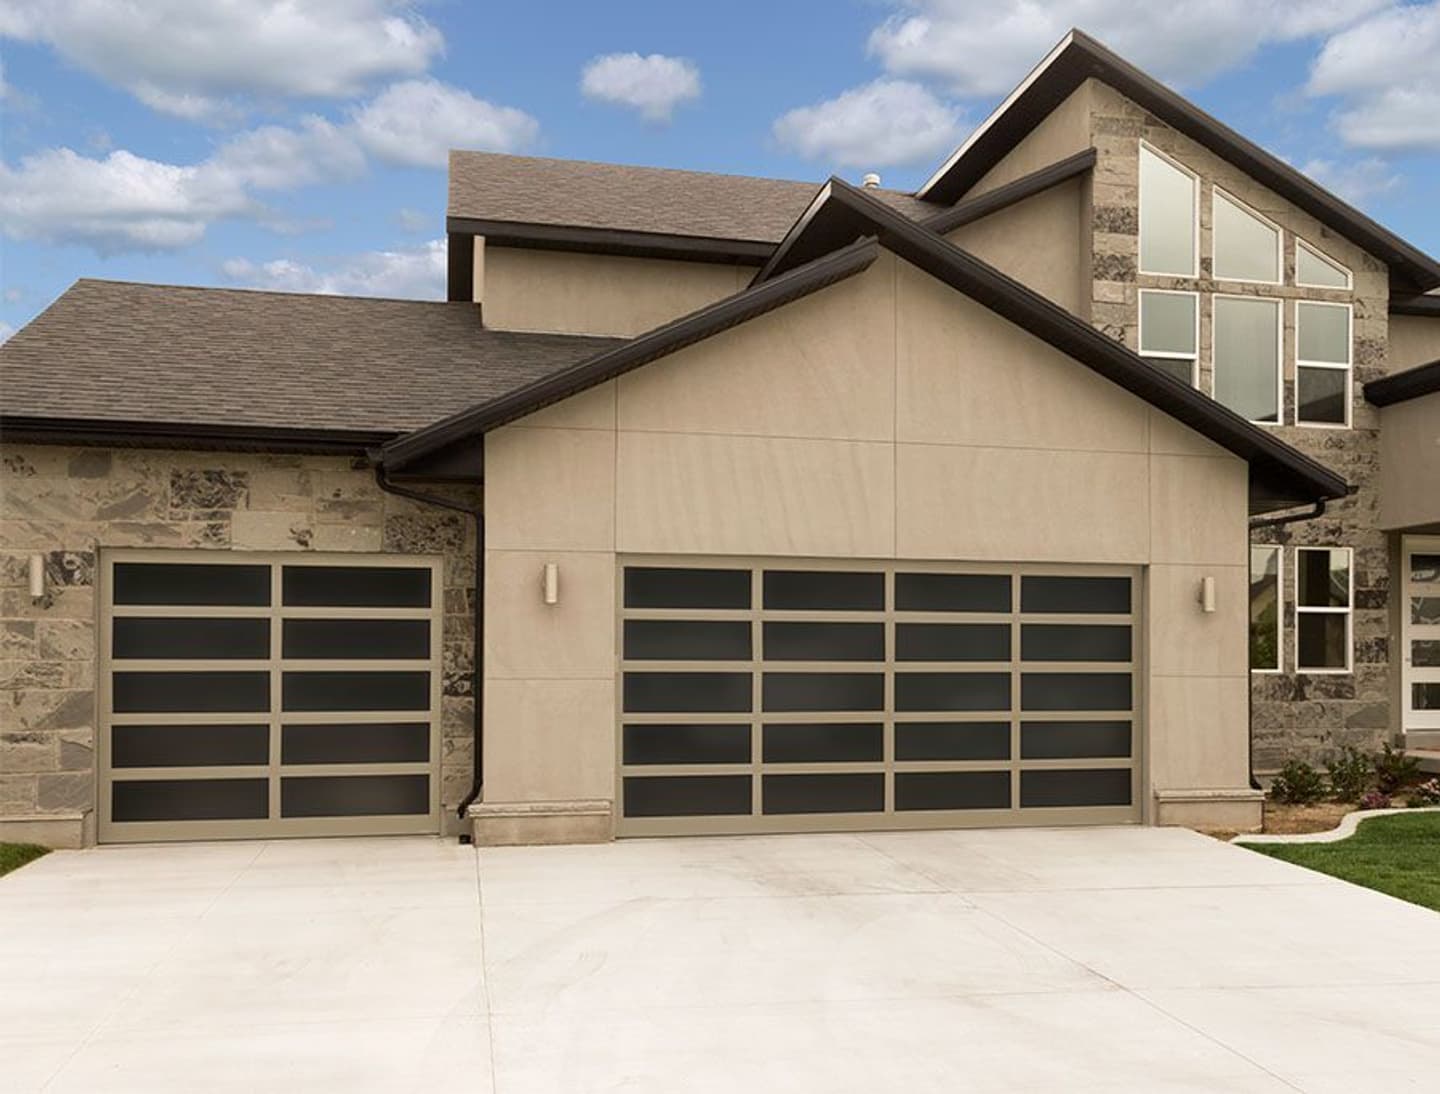 brown-modern-house-with-front-driveway-and-dark-brown-modern-garage-doors.jpg?mtime=20181123164436#asset:10859:c1440xauto